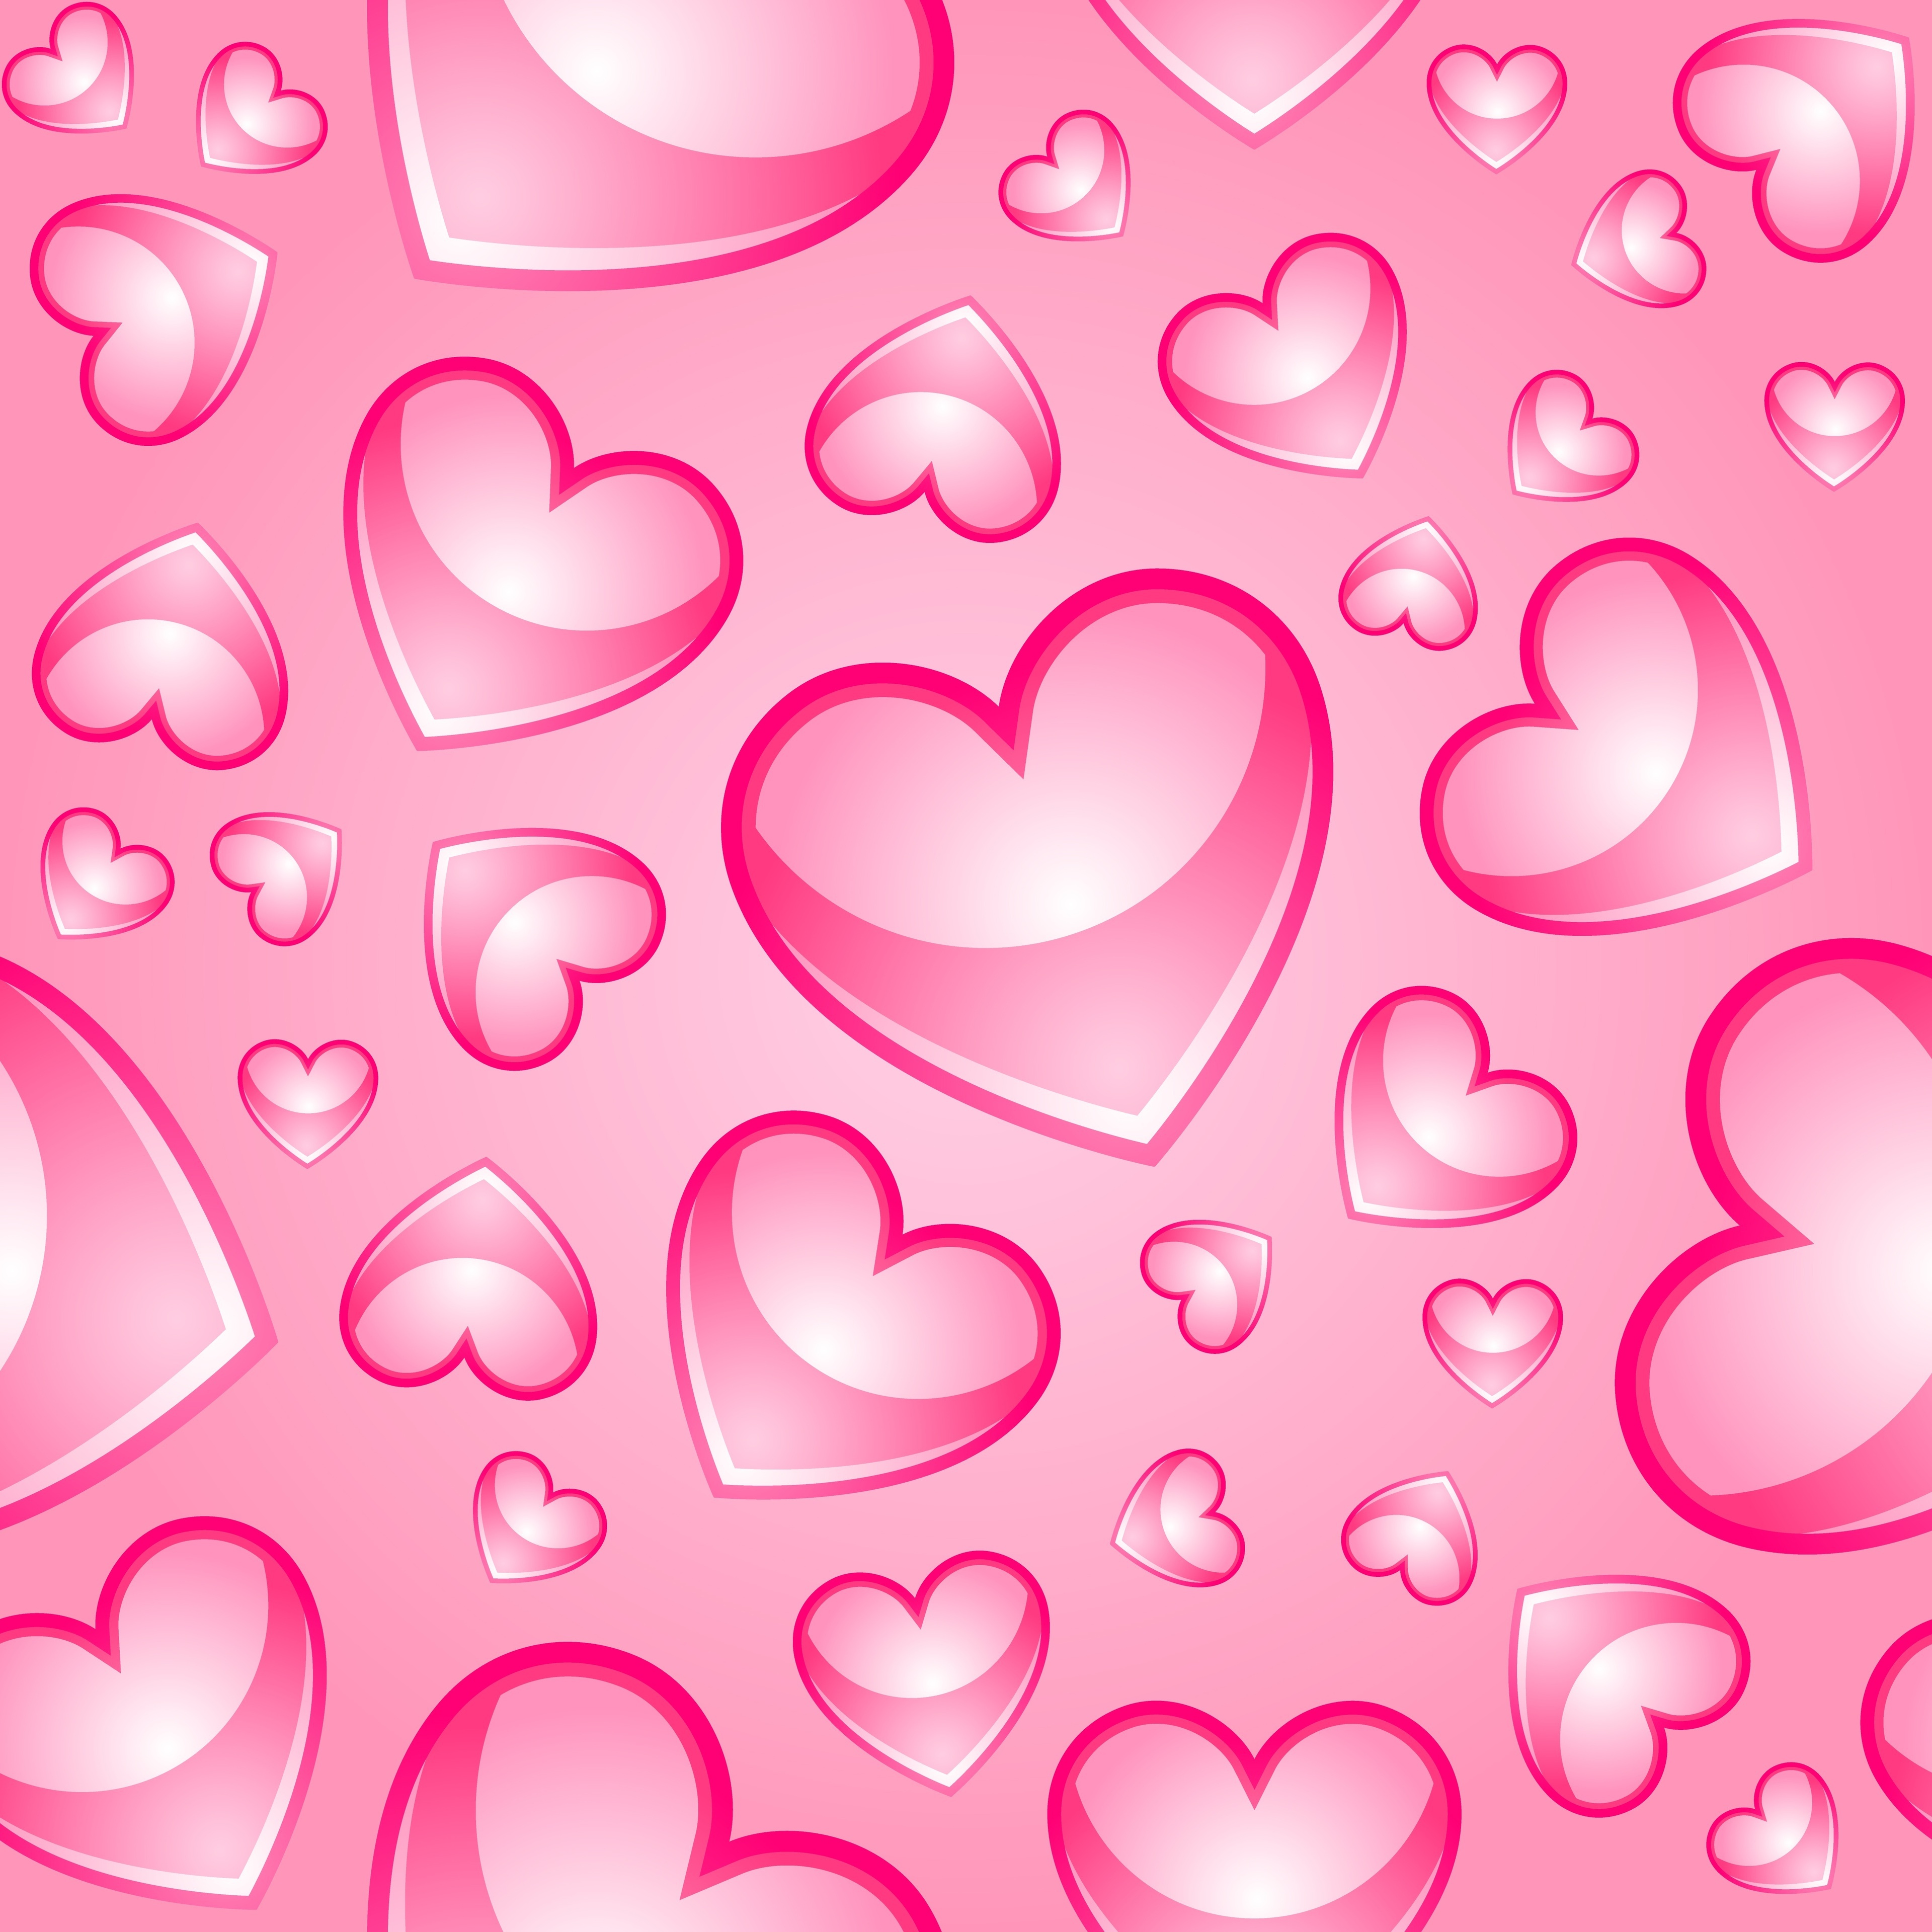 Сердечки картинки на обои. Фон сердечки. Розовые сердечки. Он сердечки. Красивый фон с сердечками.